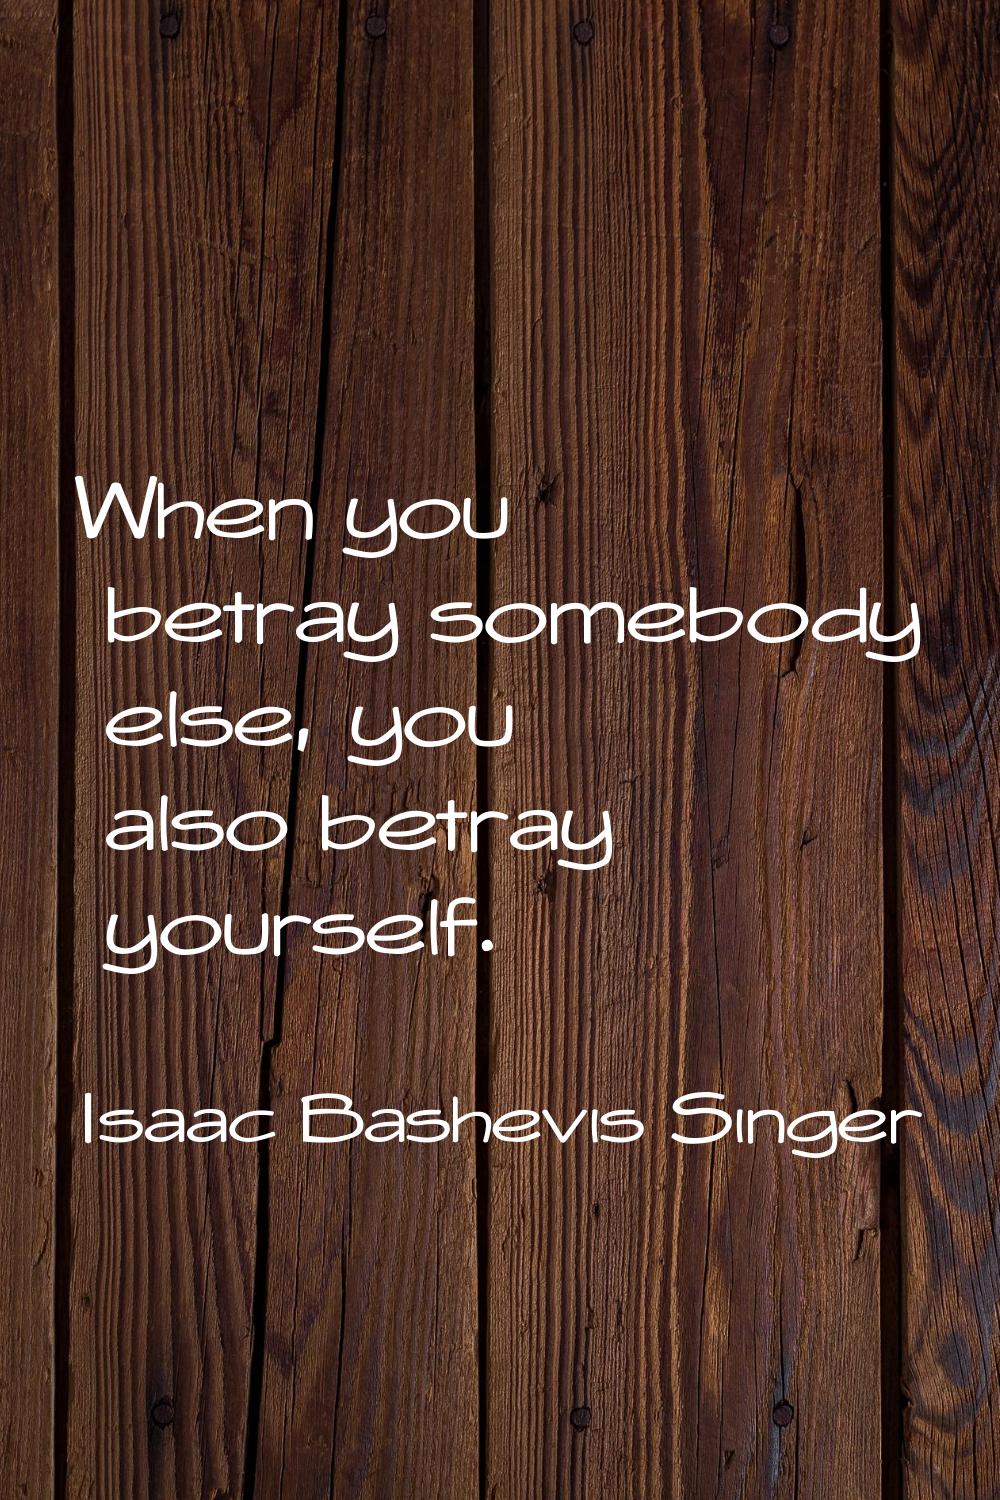 When you betray somebody else, you also betray yourself.